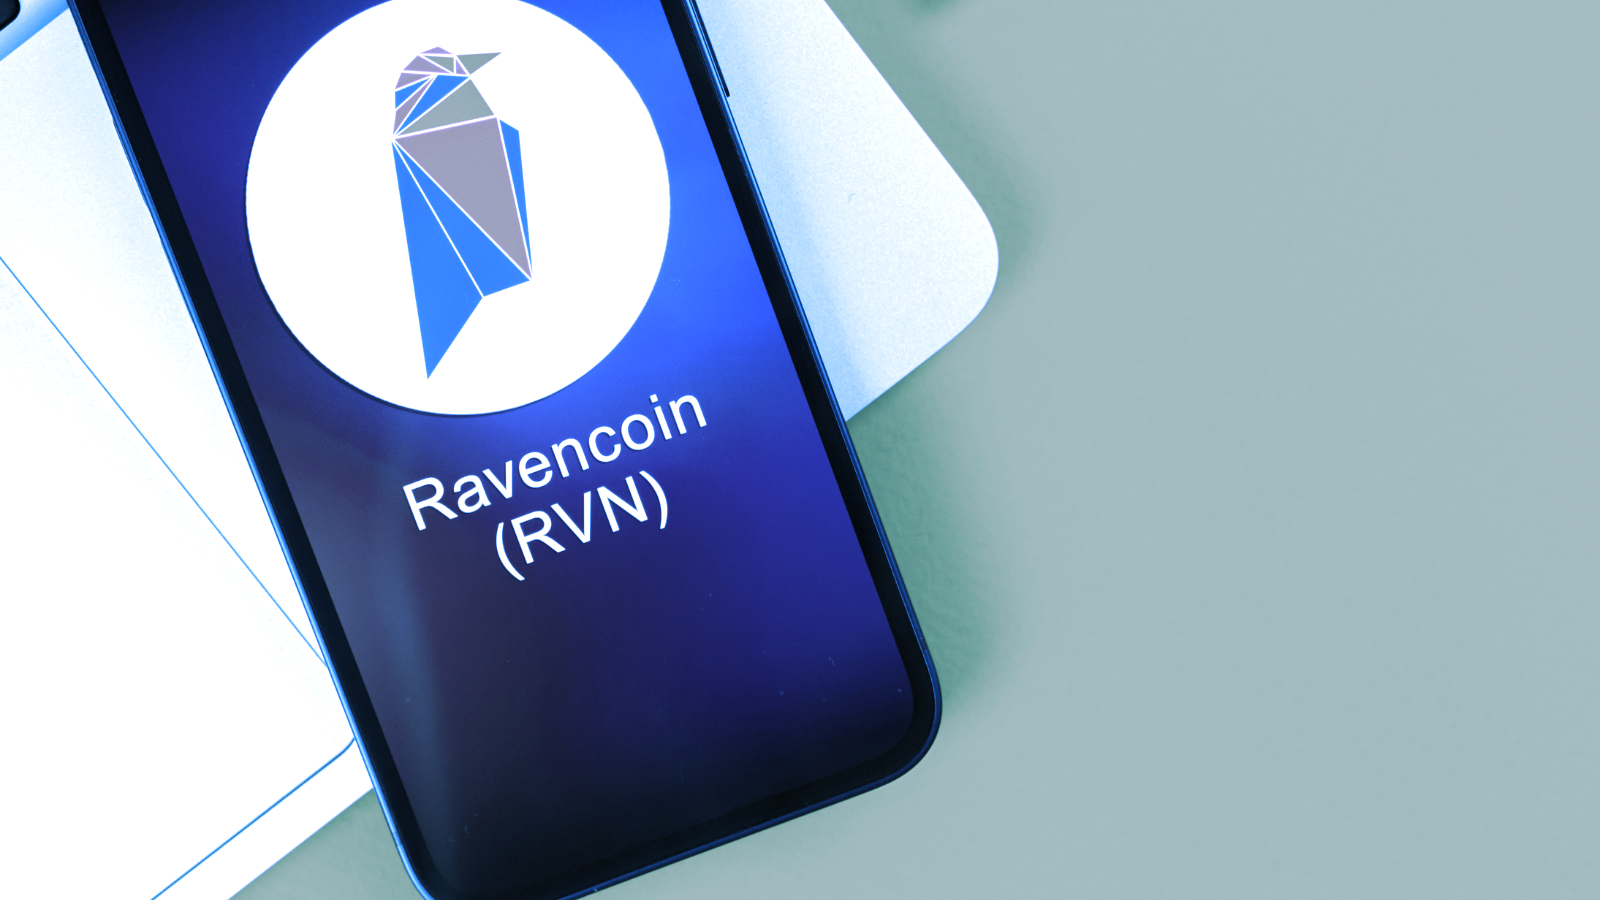 Ethereum Mining Alternative Ravencoin Jumps 85% Ahead of the Merge